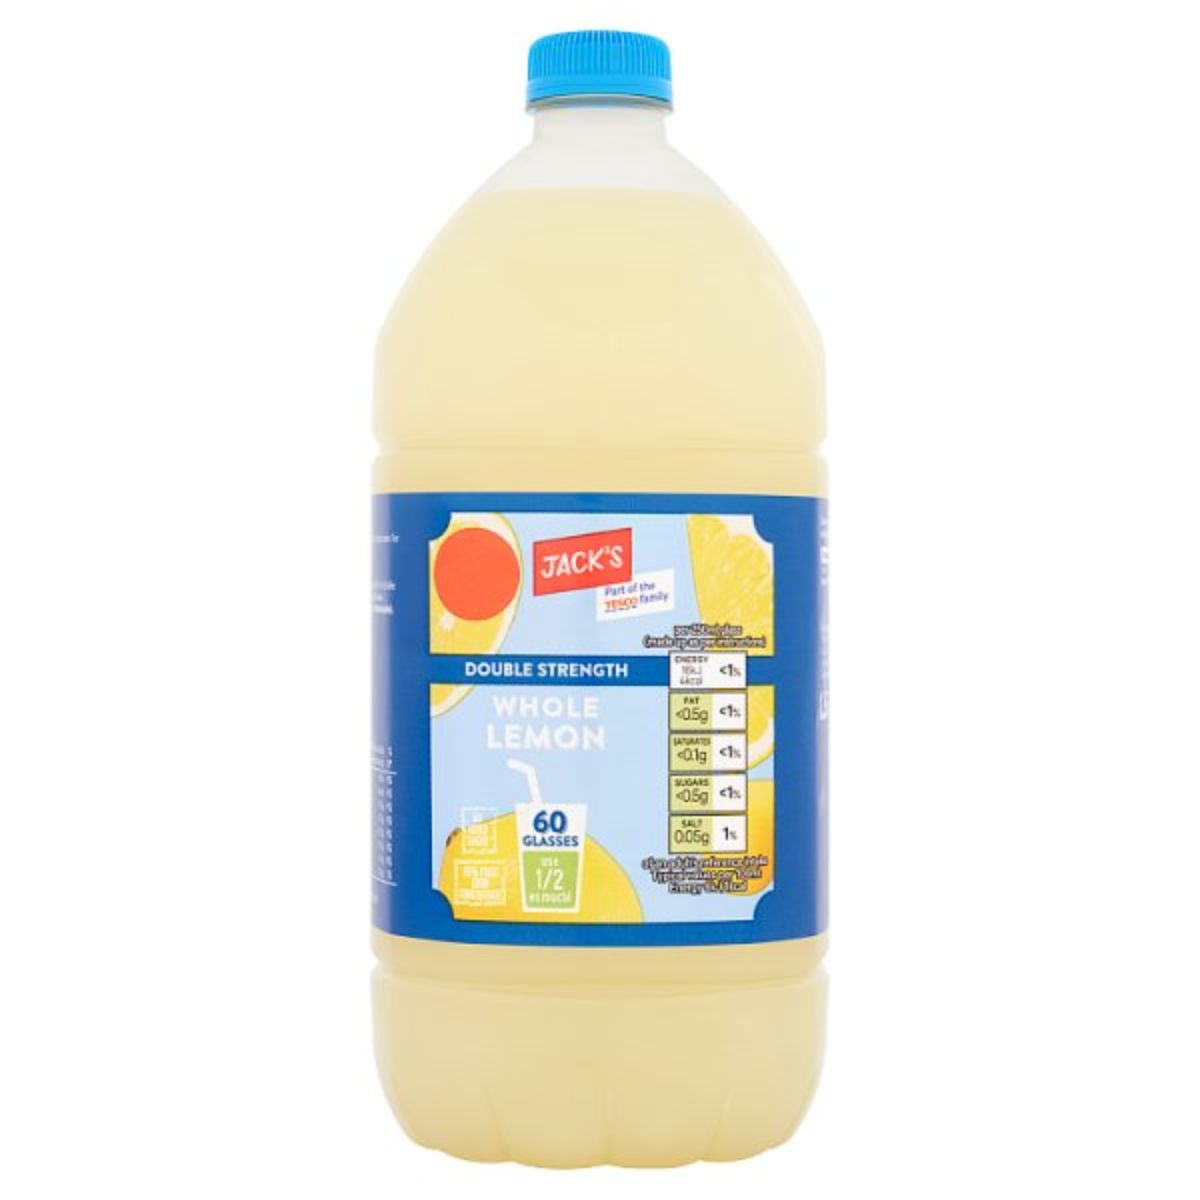 A gallon of Jacks - Double Strength Whole Lemon - 1.5L on a white background.